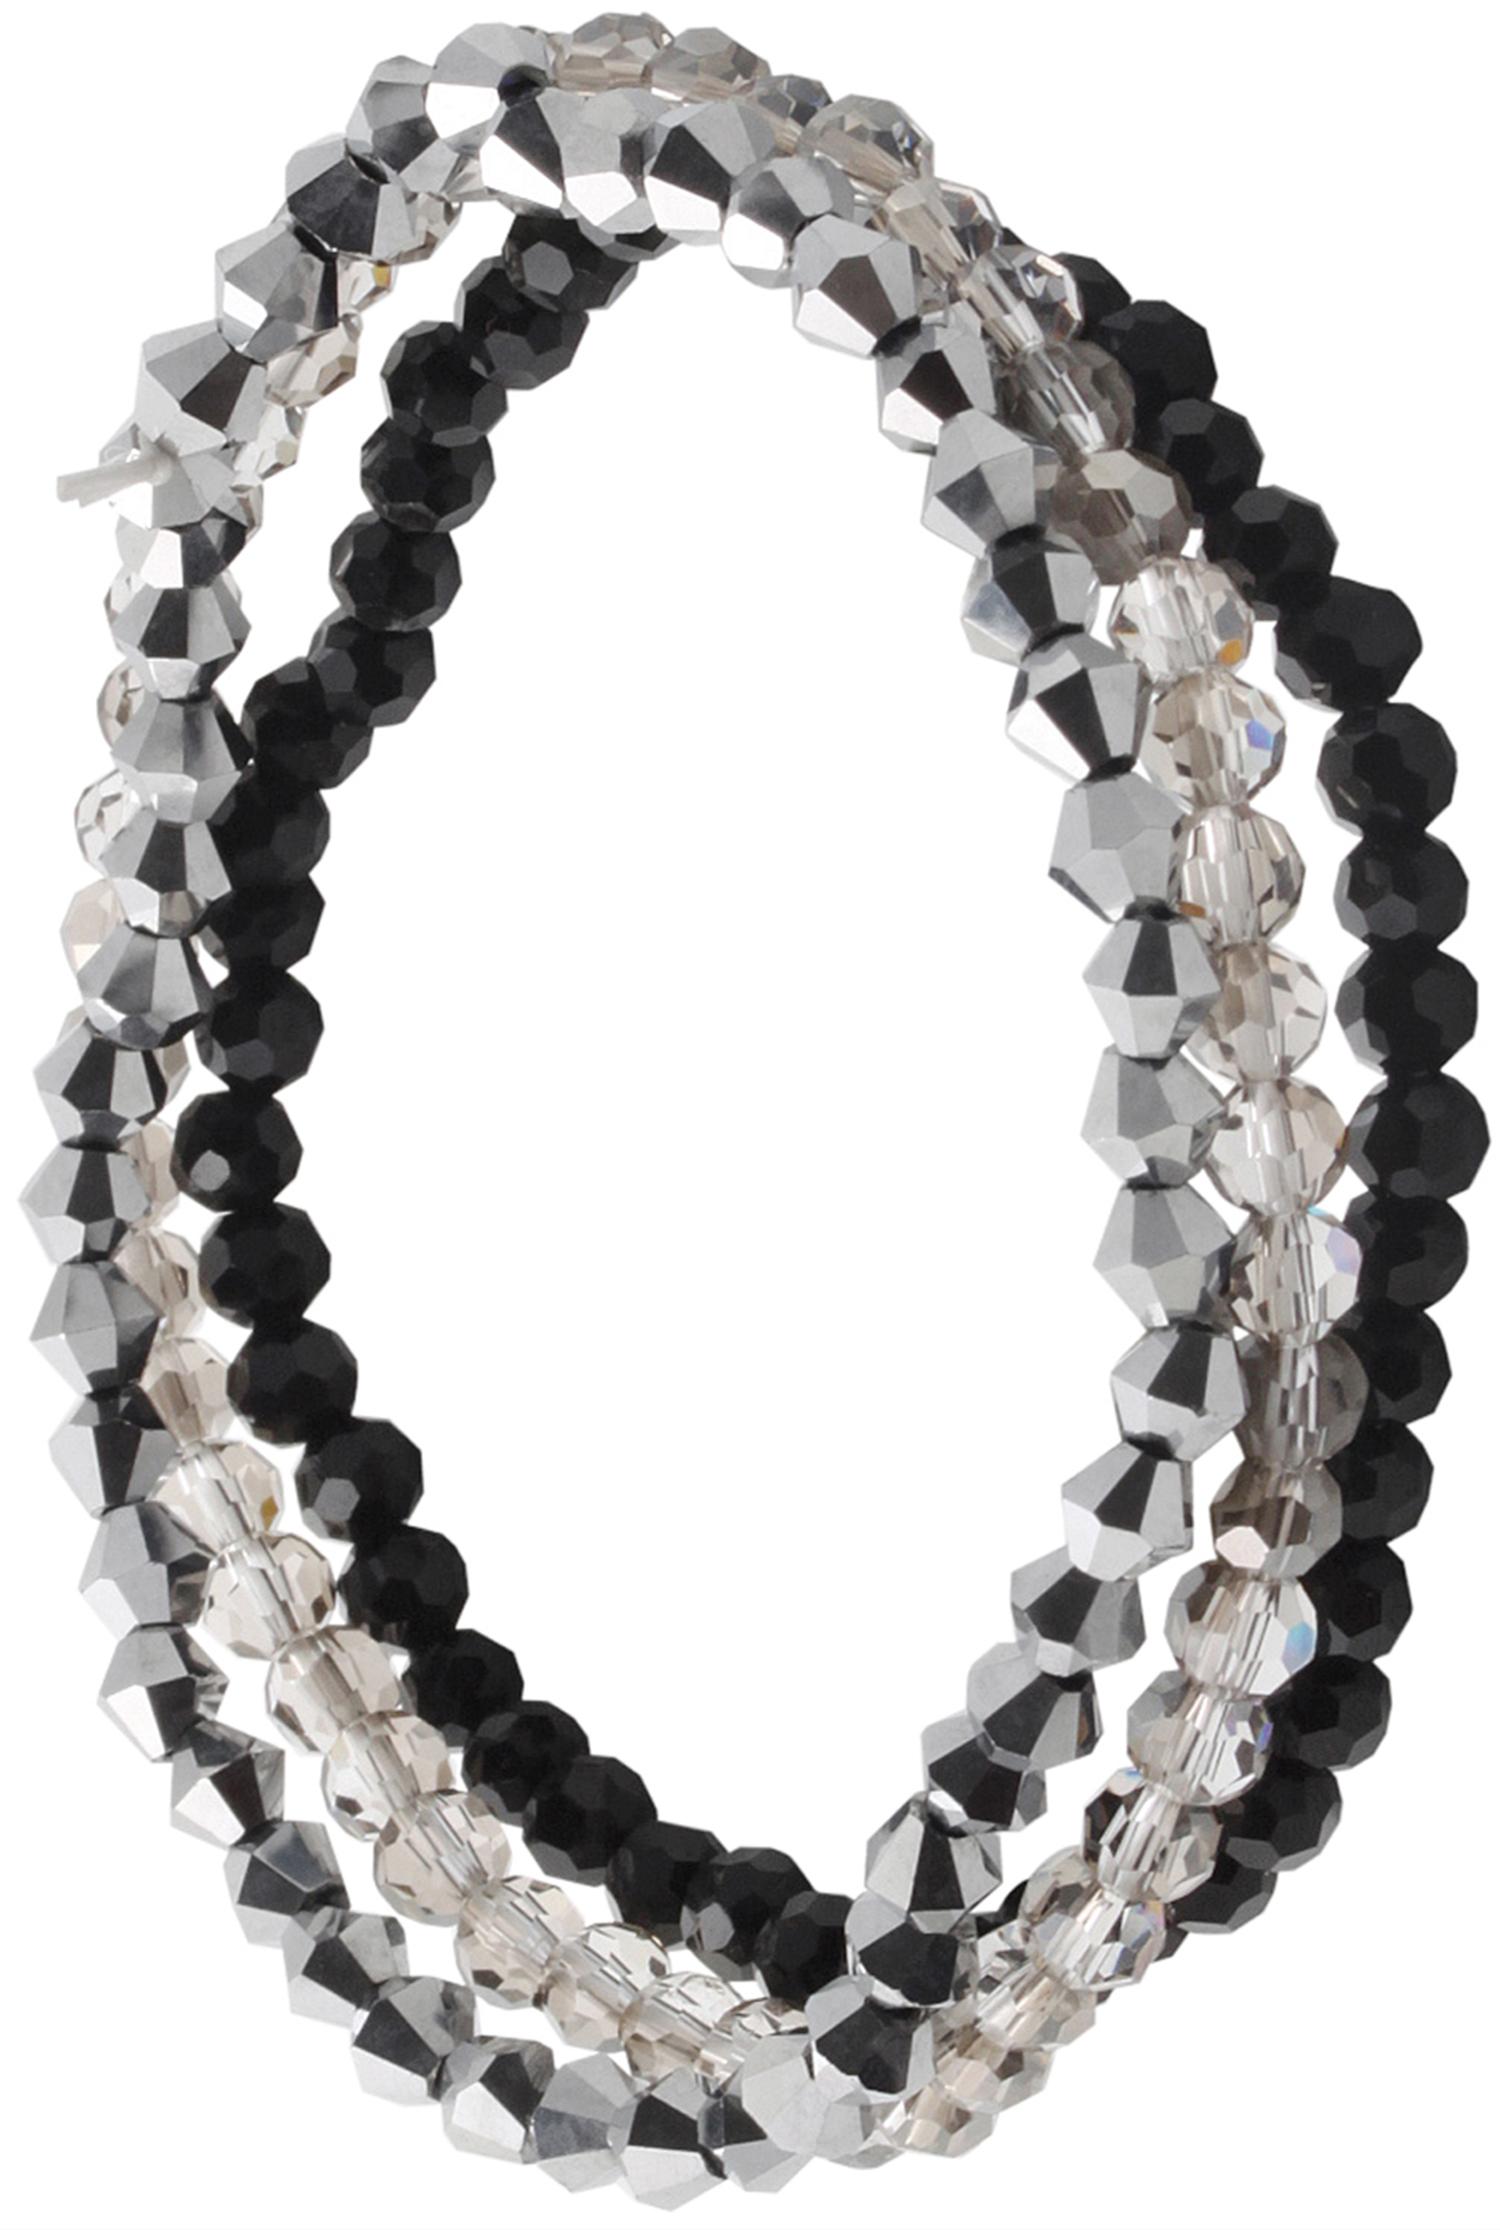 Bracelet - Small Beads